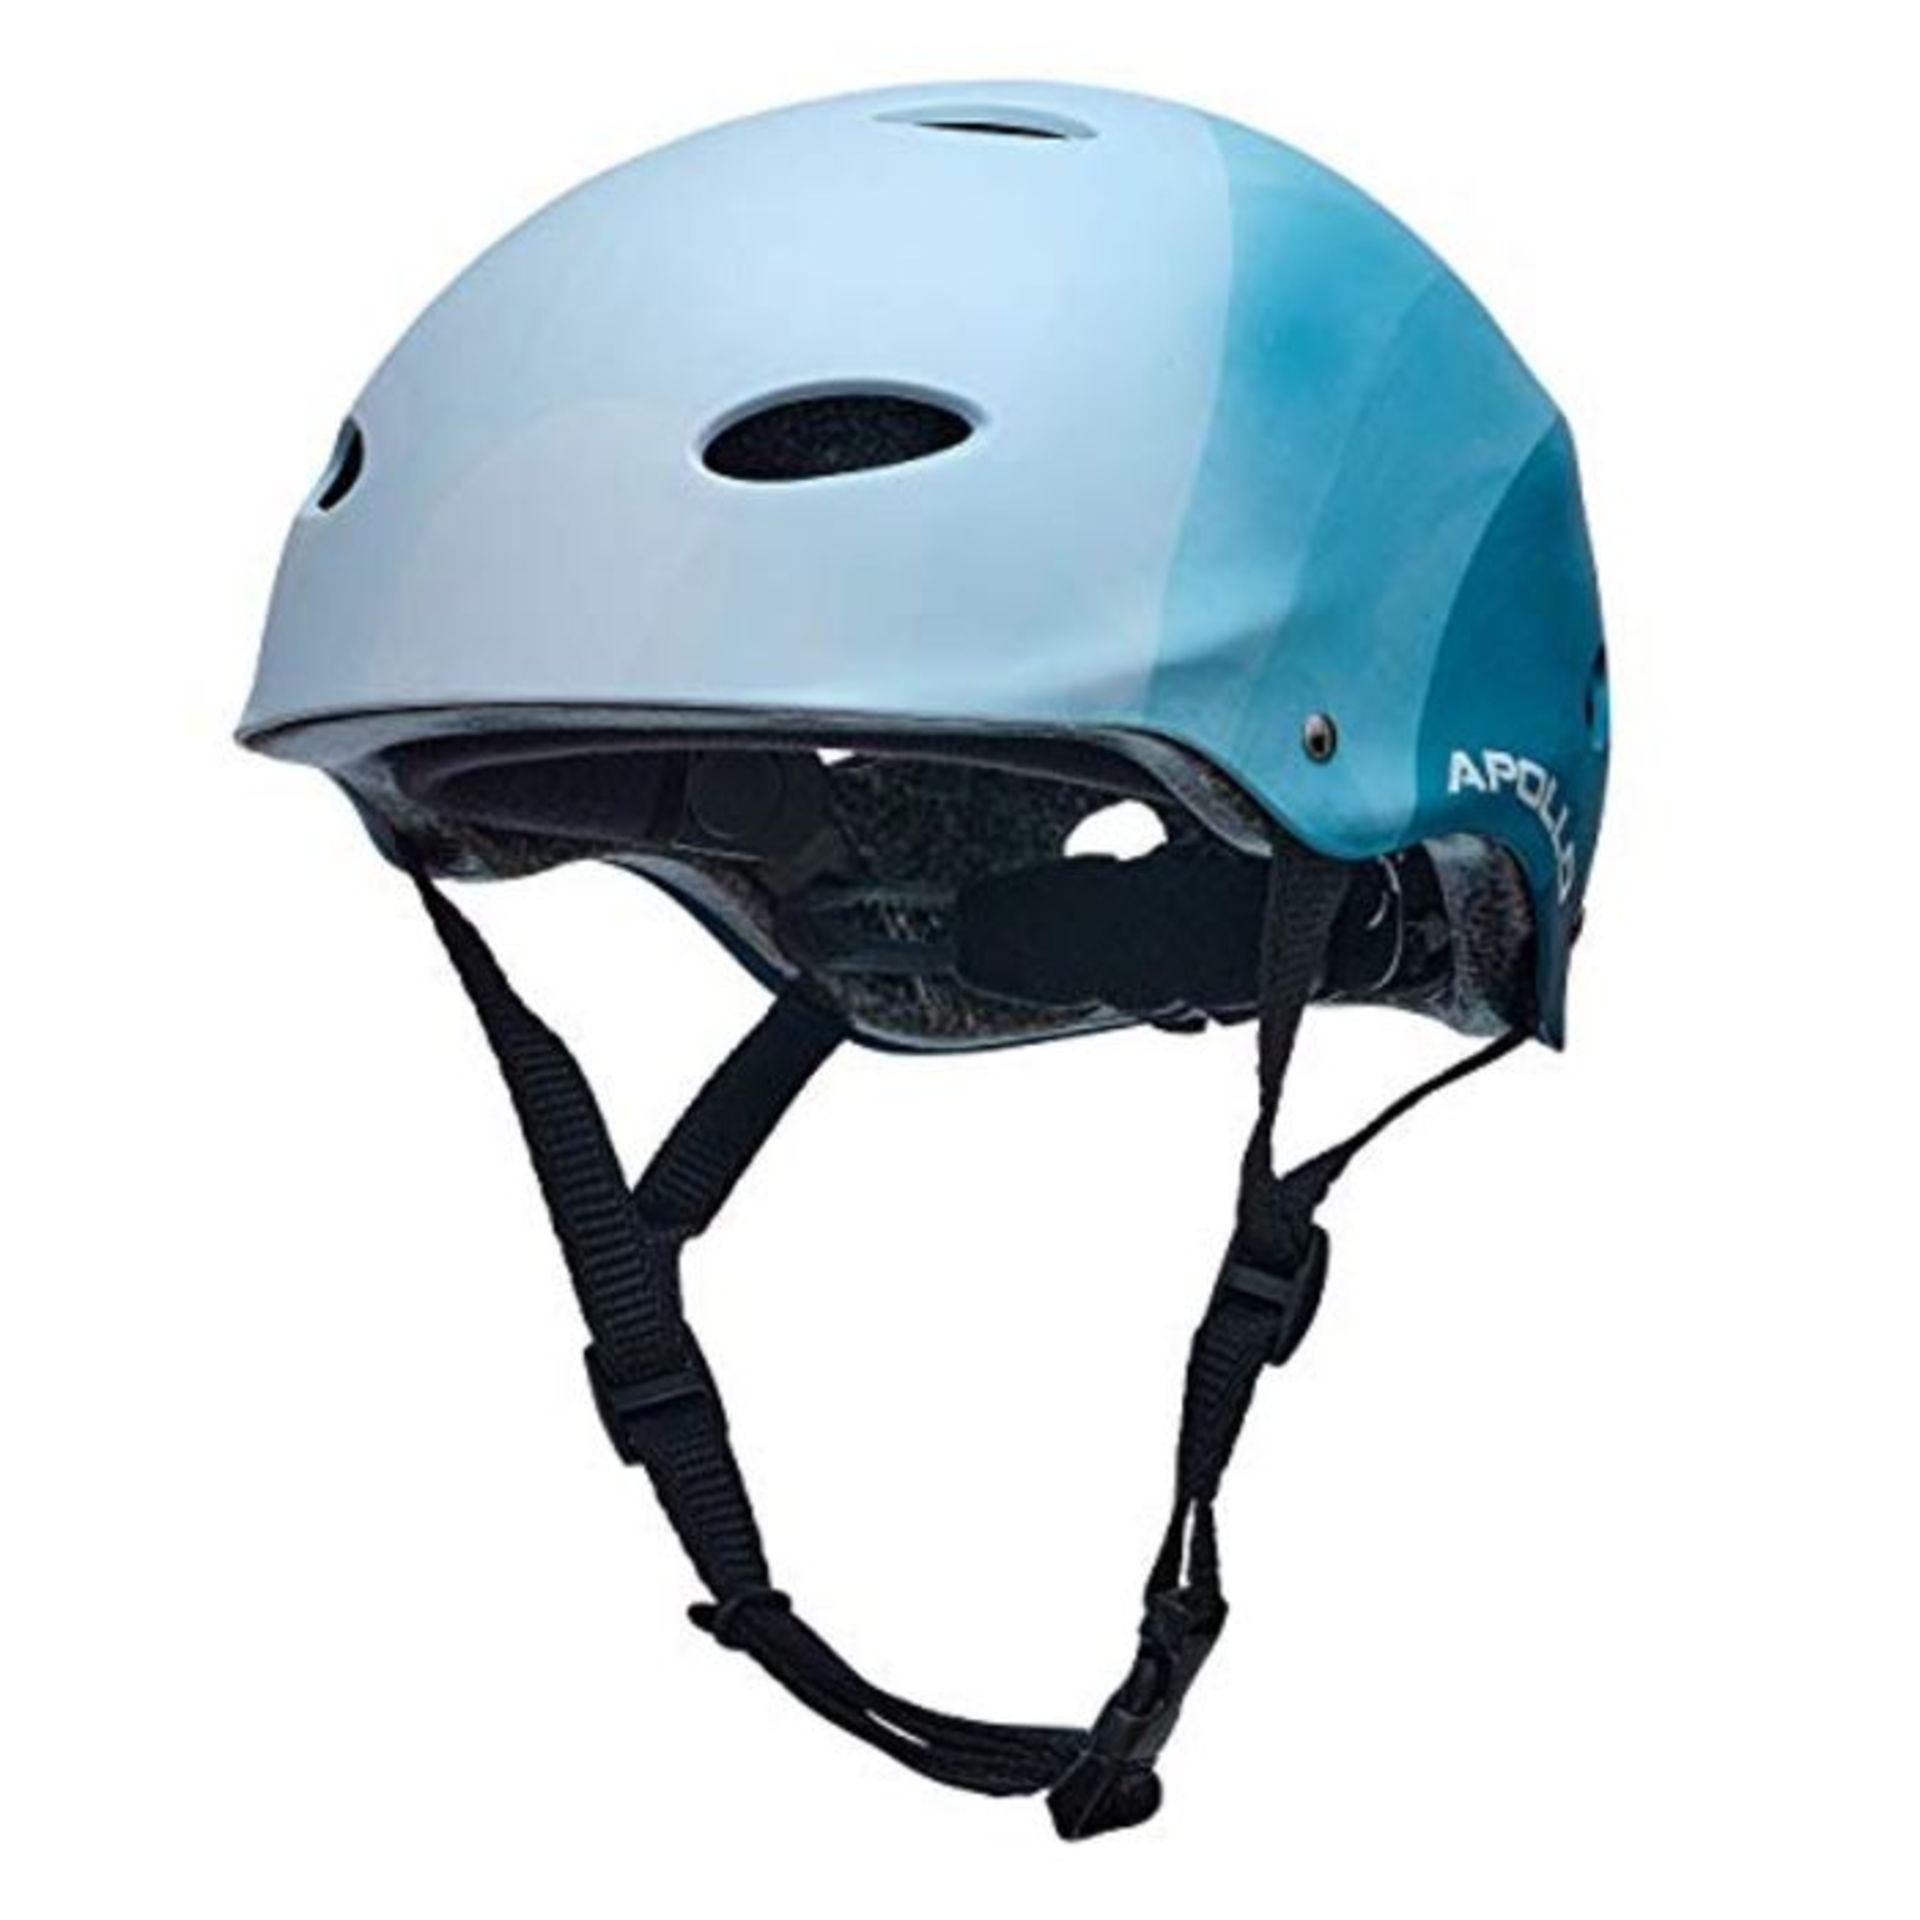 APOLLO Skateboard Helmet - Bike Helmet - Adjustable Skateboard, Scooter, BMX Helmet, w